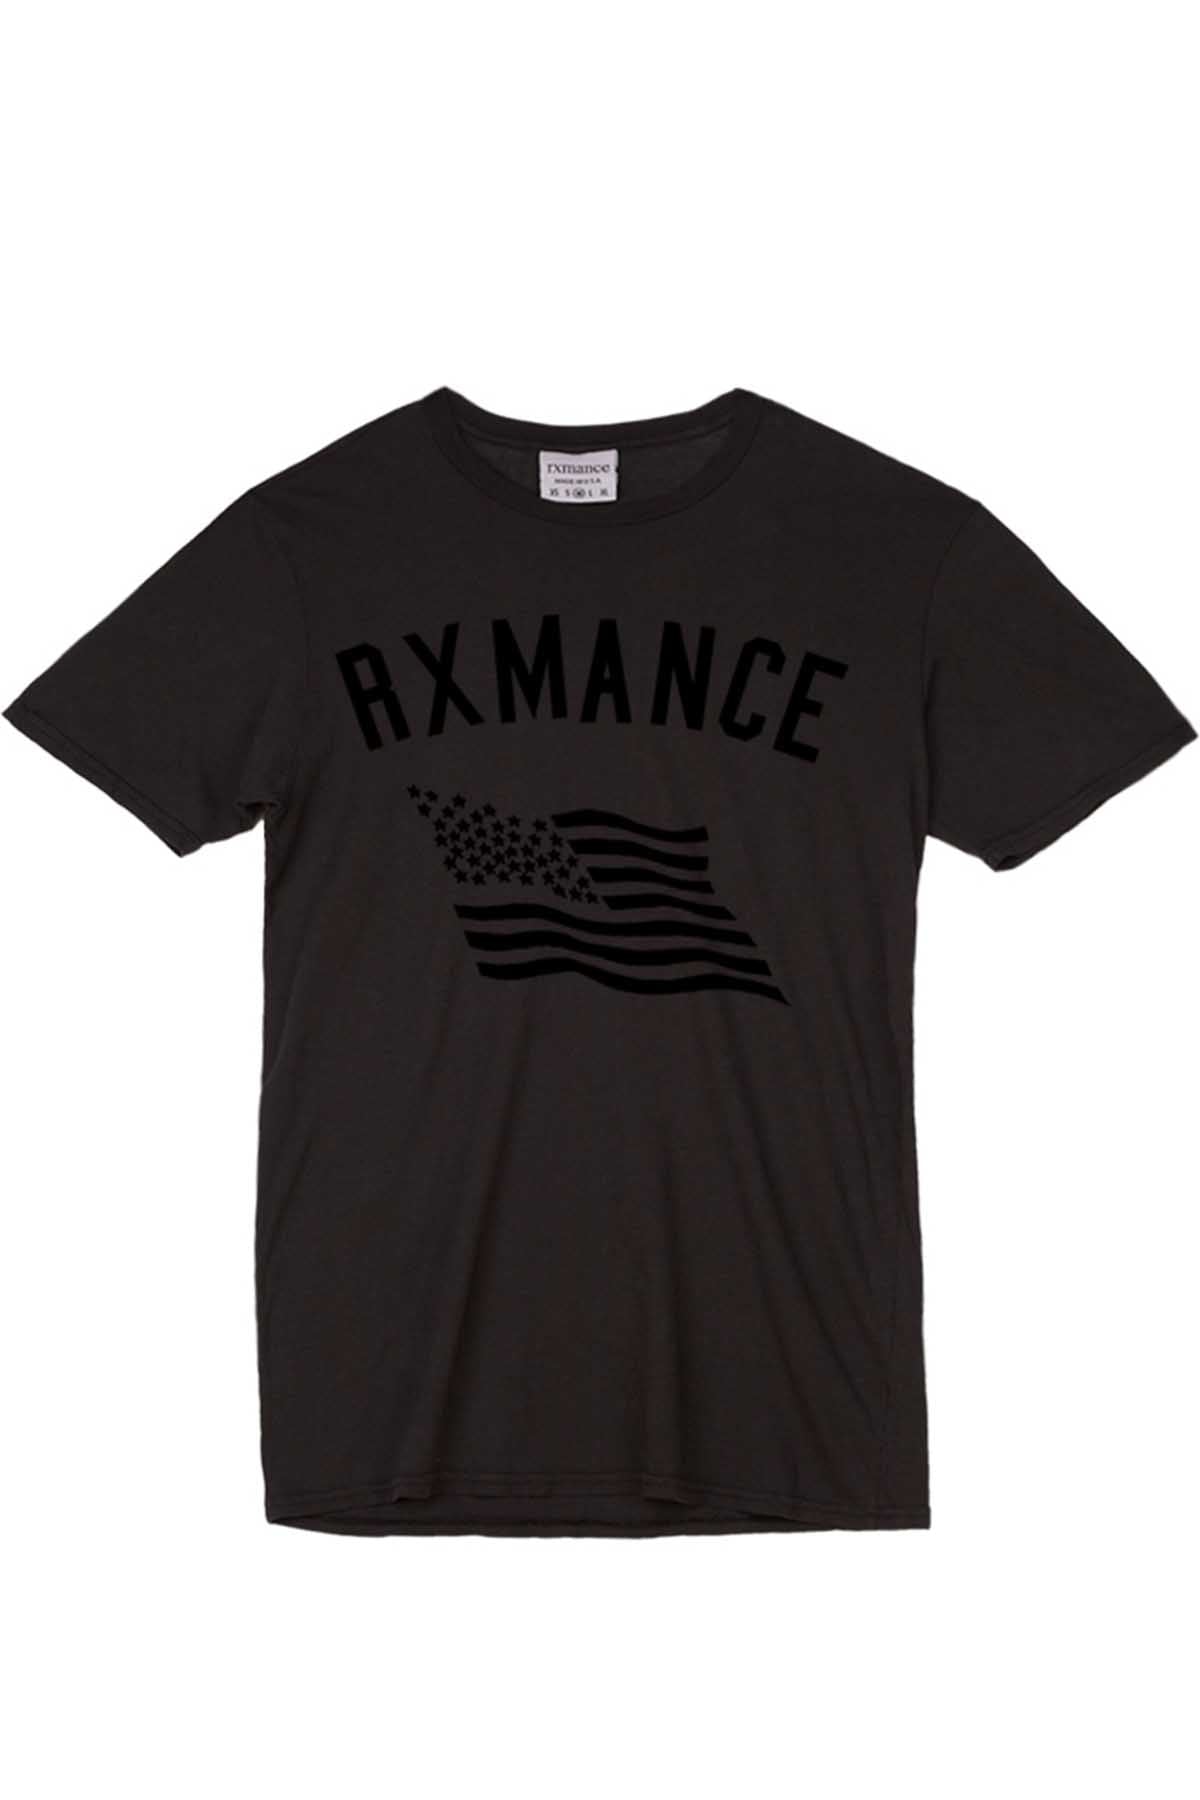 Rxmance Unisex Black 'Flowing Flag' Tee